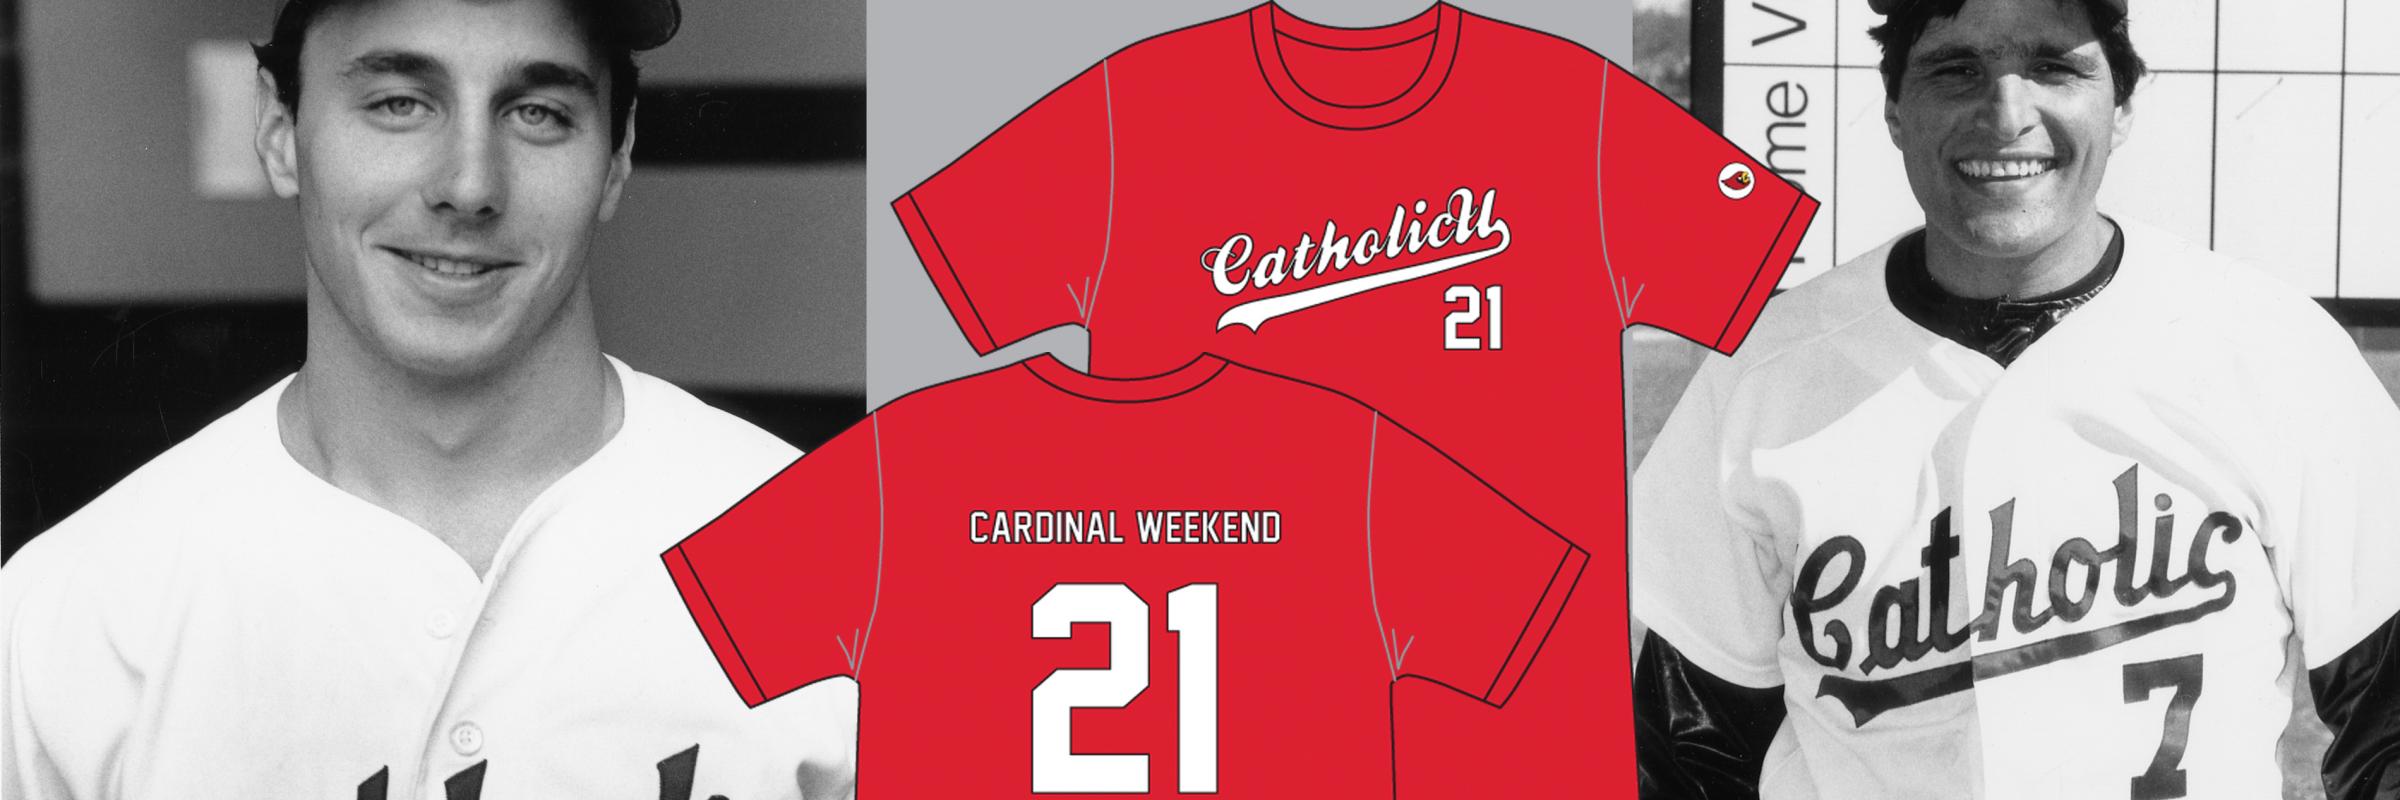 Brian Cashman, B.A. 1989, Ross Natoli, and the Cardinal Weekend 2021 T-shirt